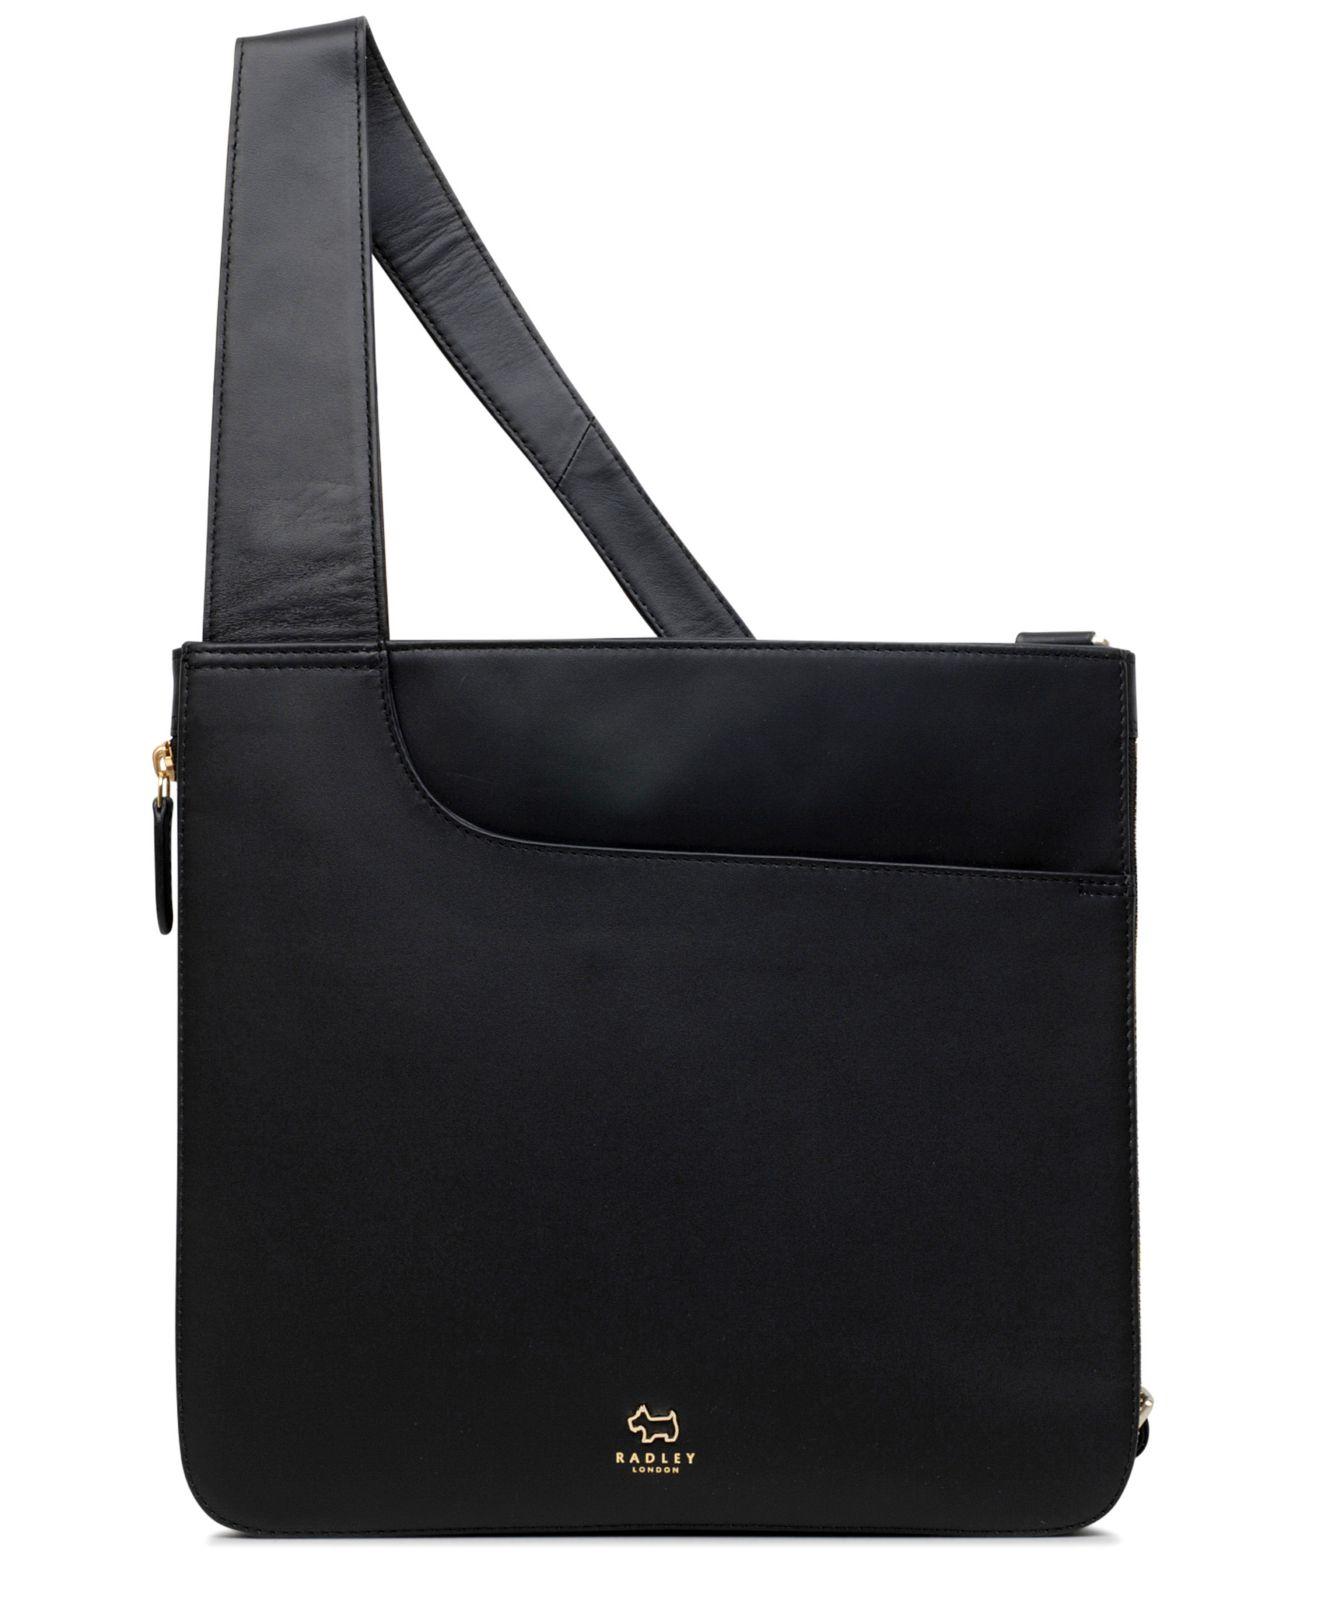 Radley Pocket Bag Zip-top Leather Crossbody in Black/Gold (Black) - Save 40% - Lyst